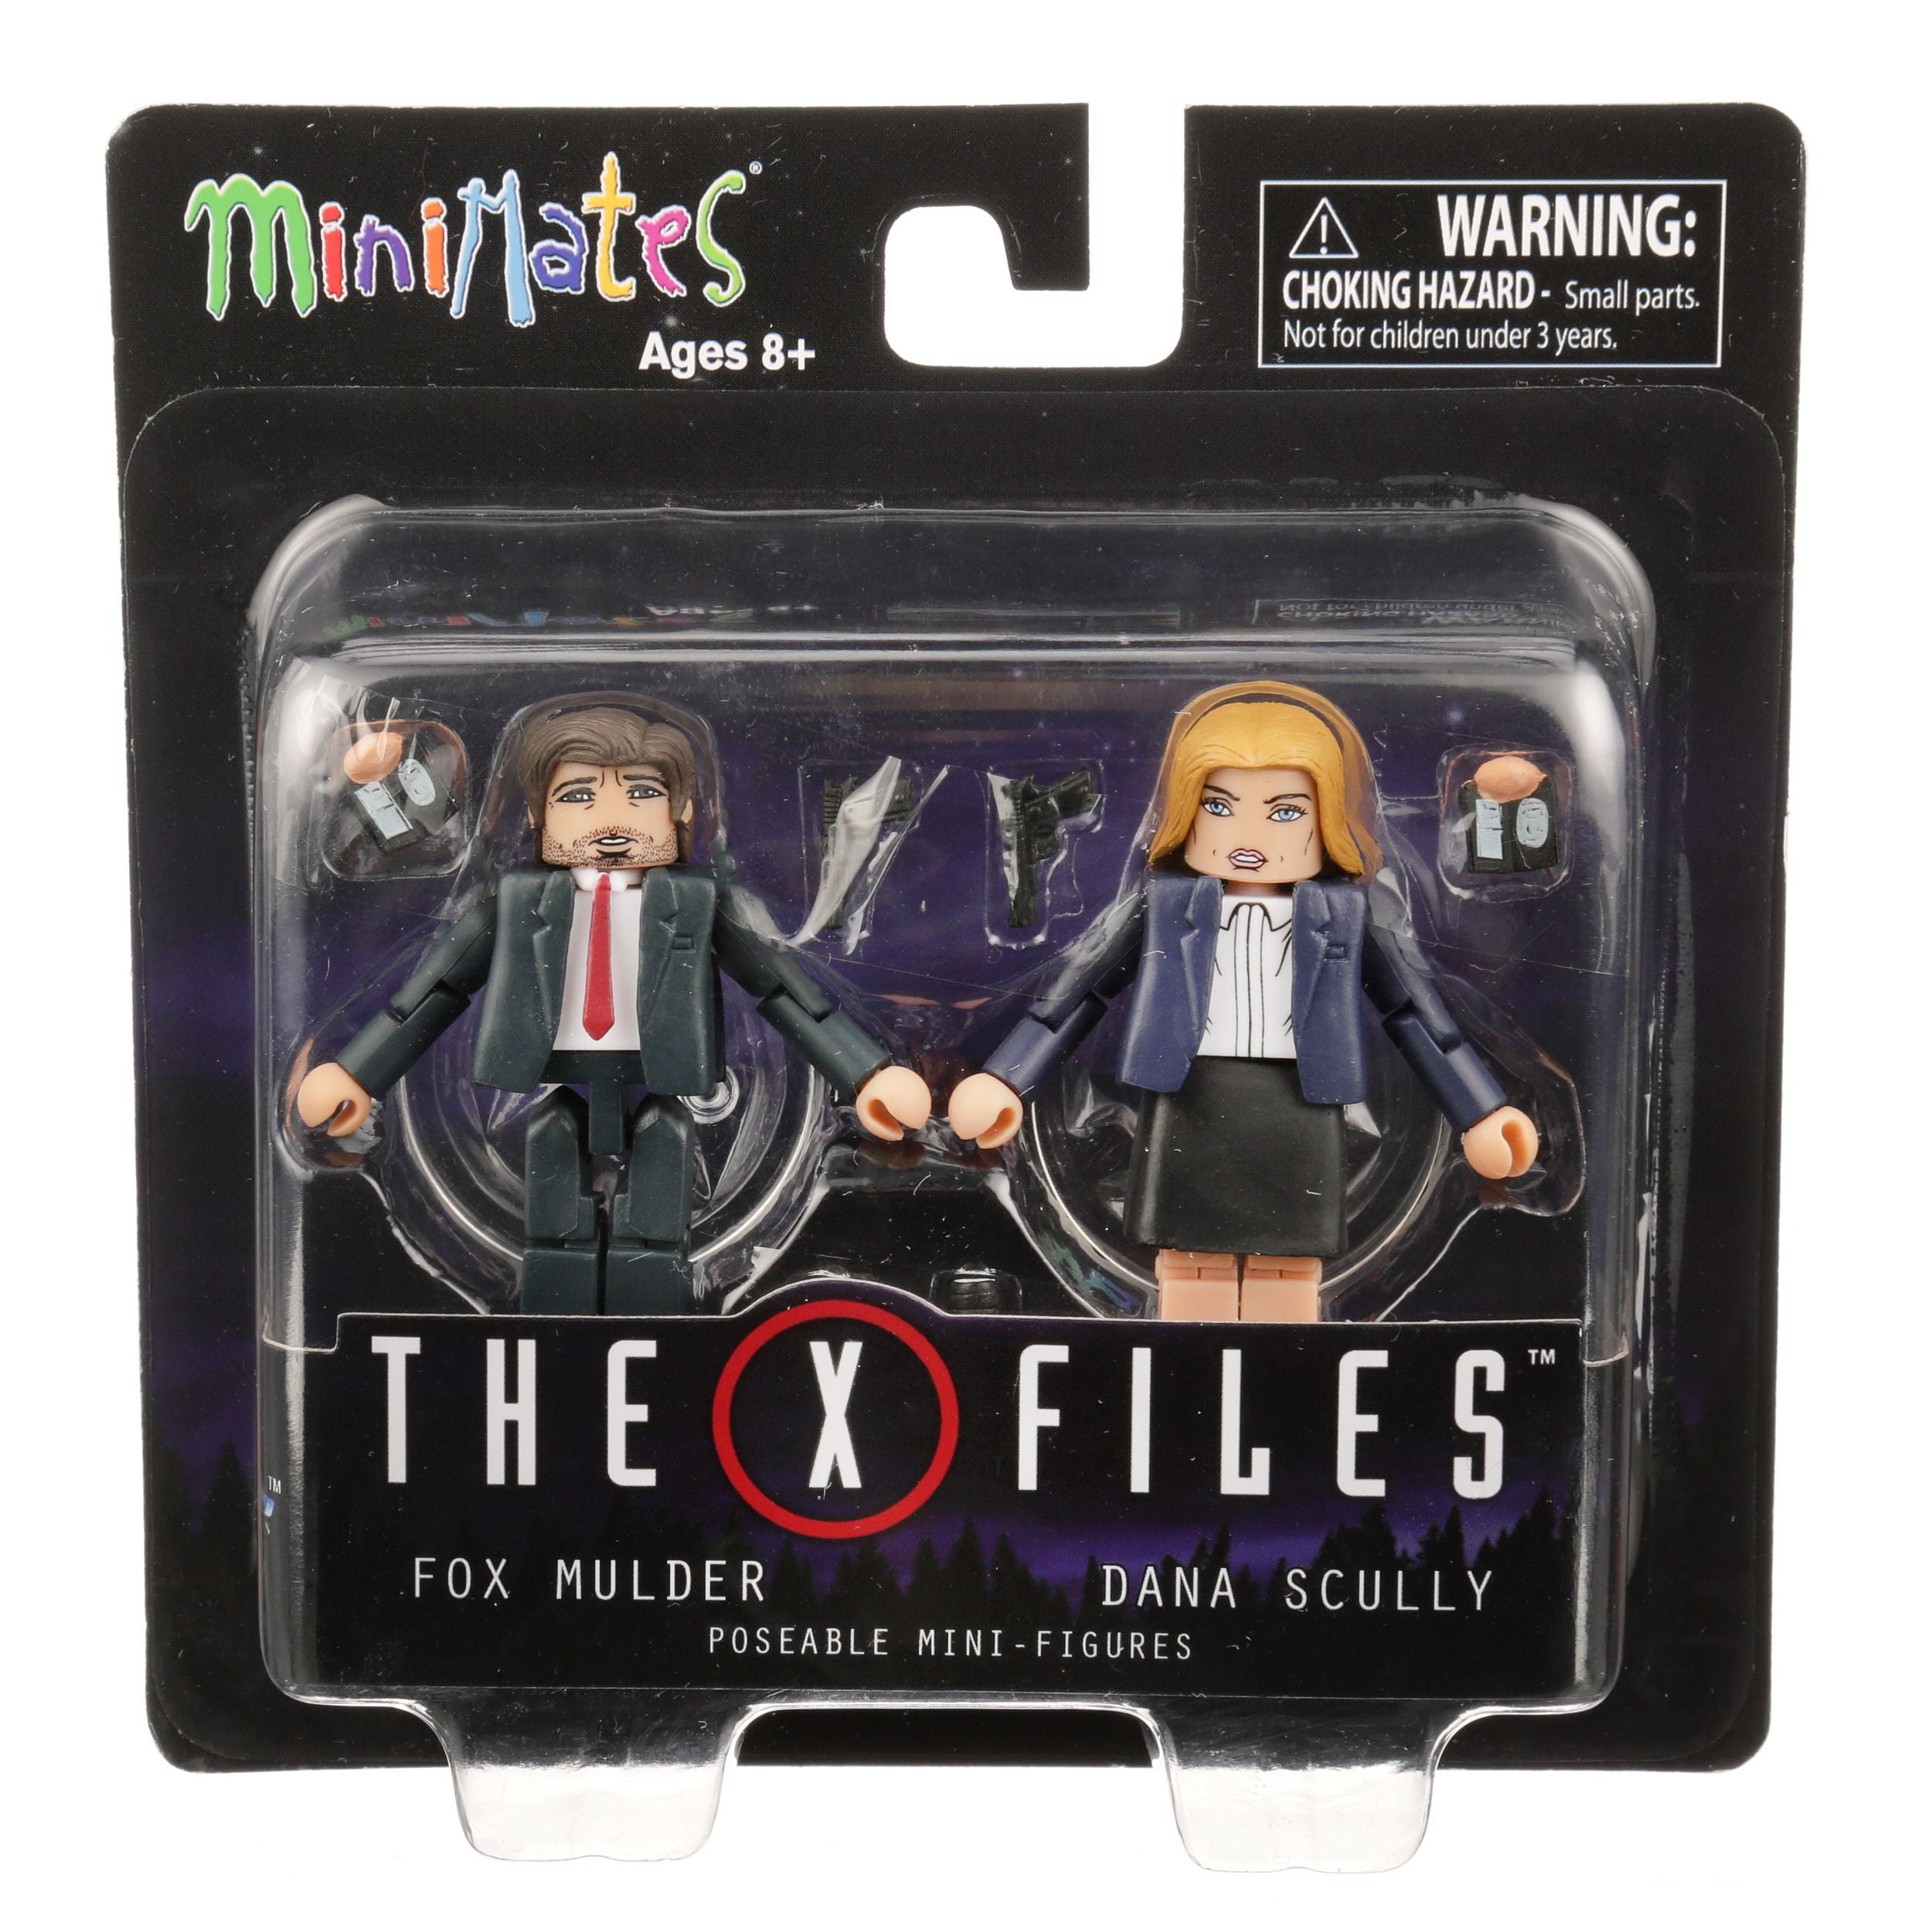 The X-Files Minimates Fox Mulder 